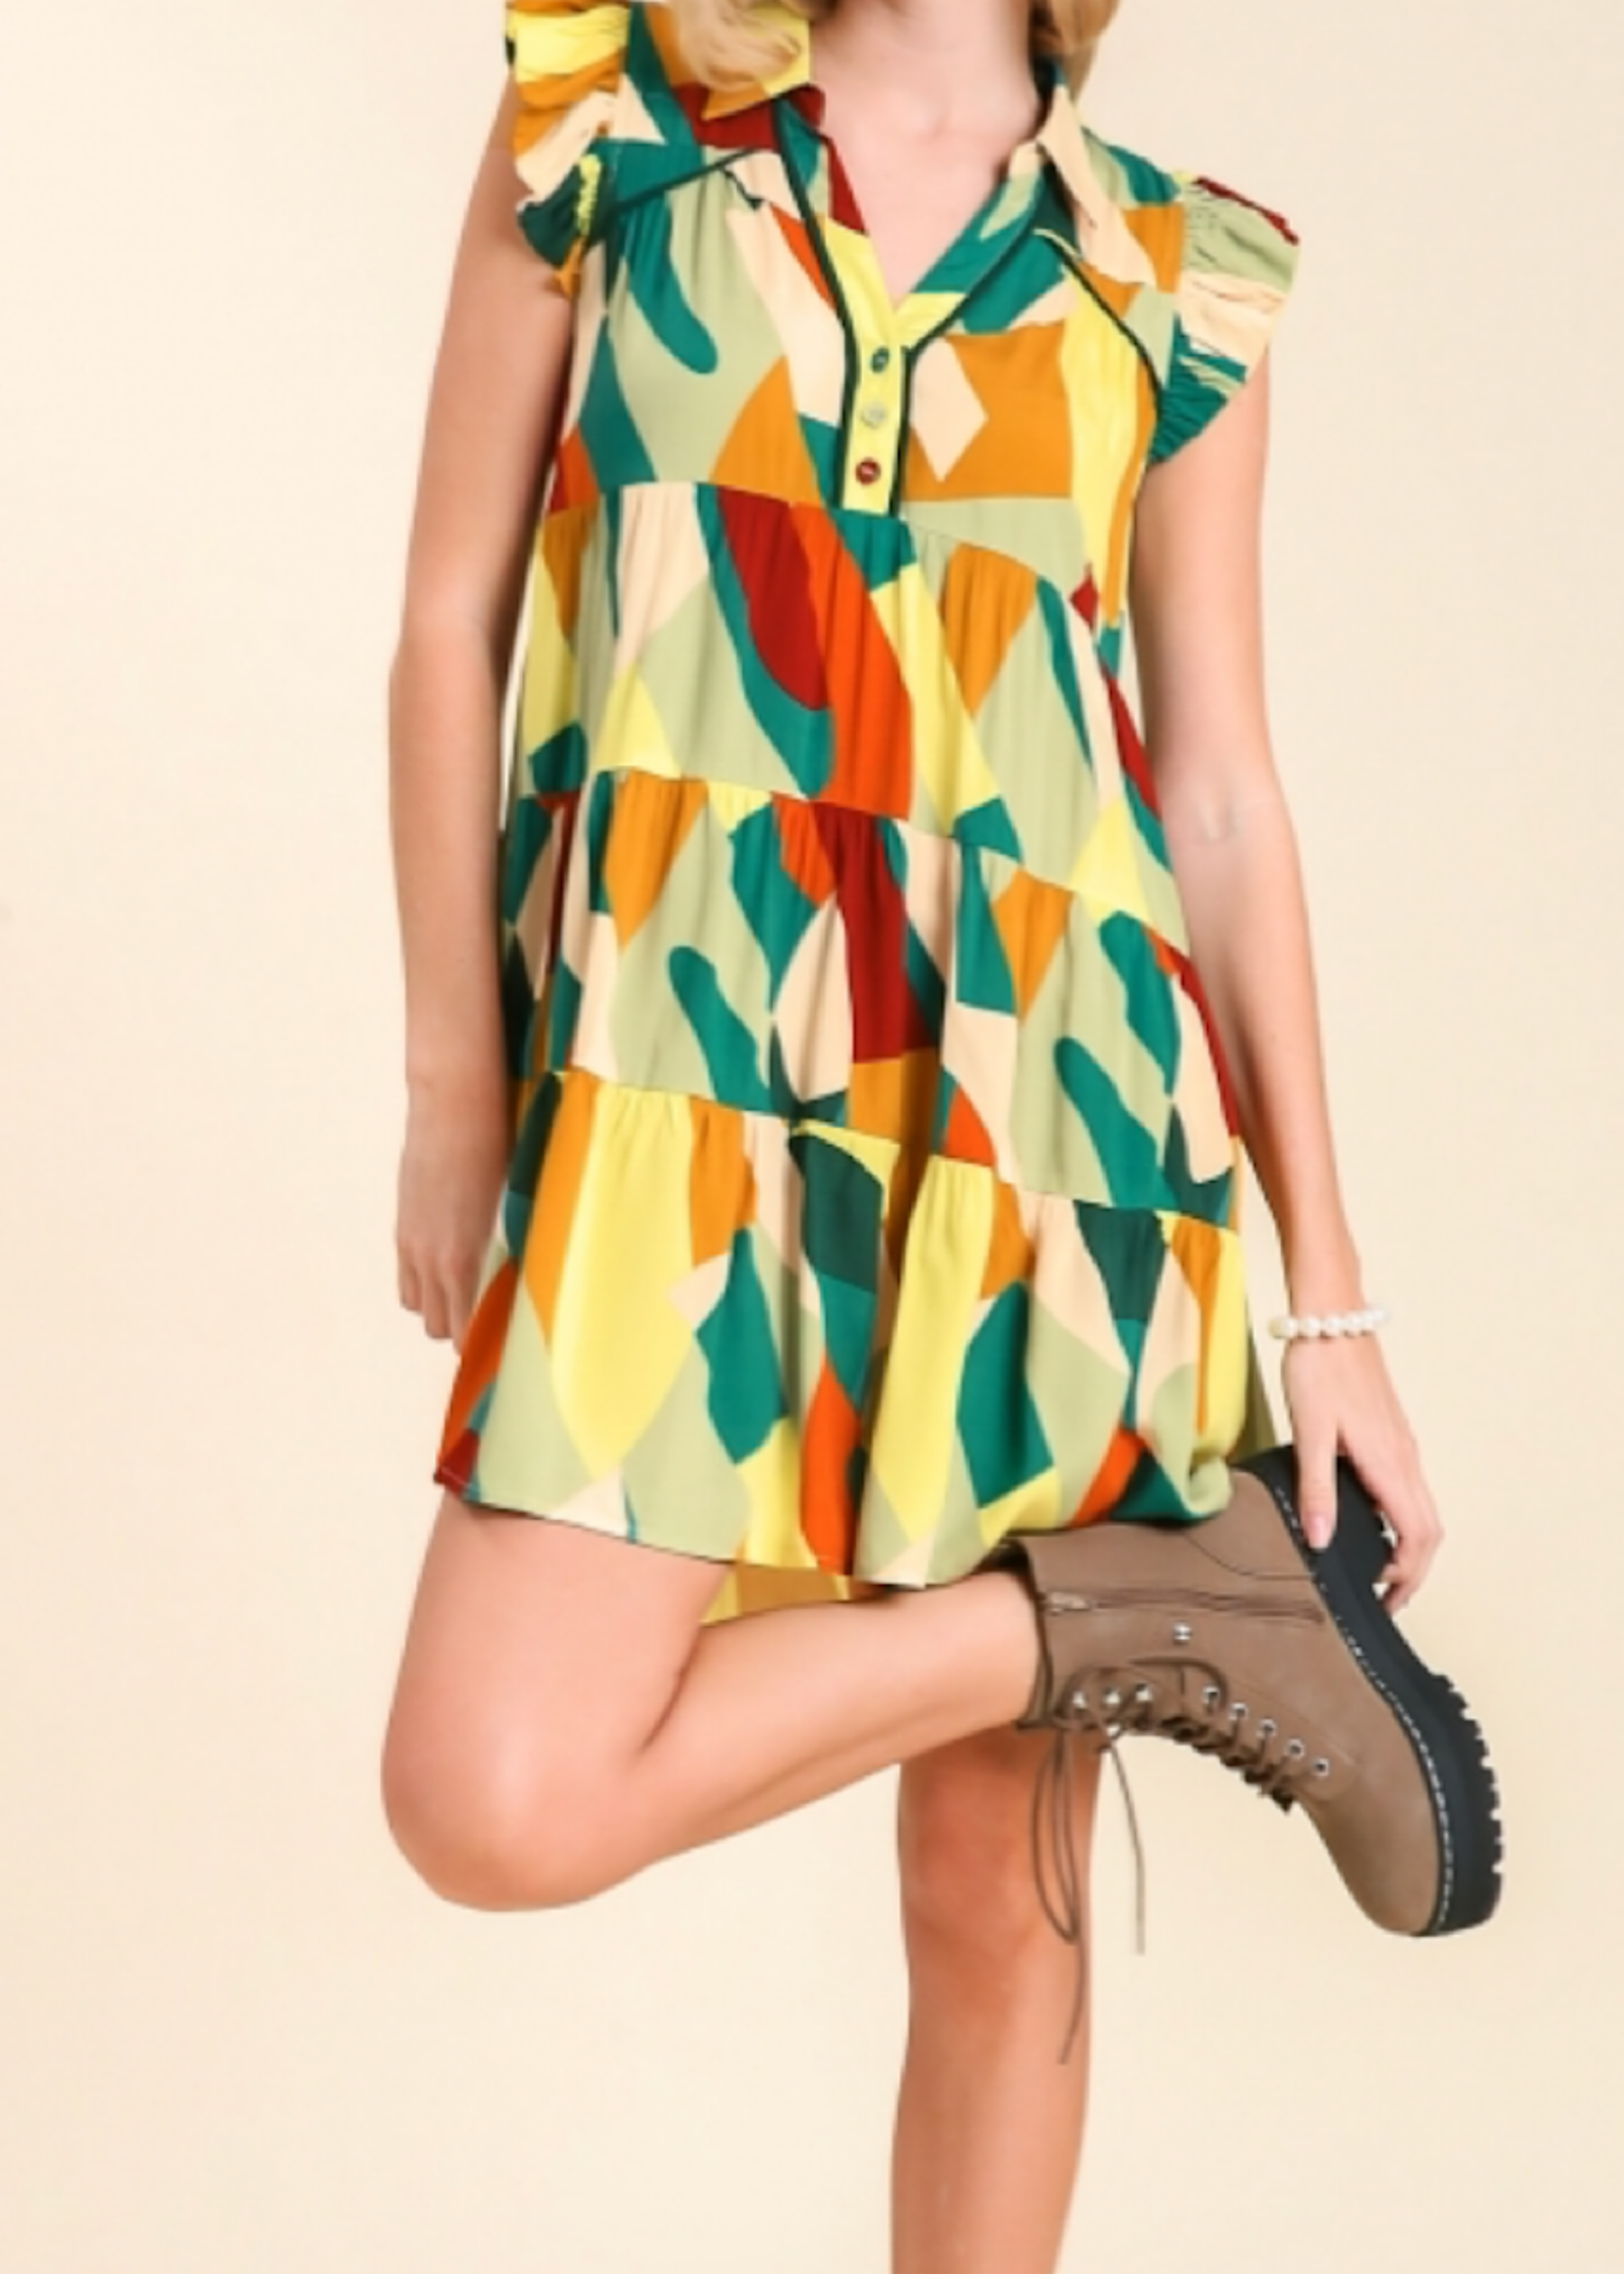 Teal/Sage Multi Color Abstract Print Dress